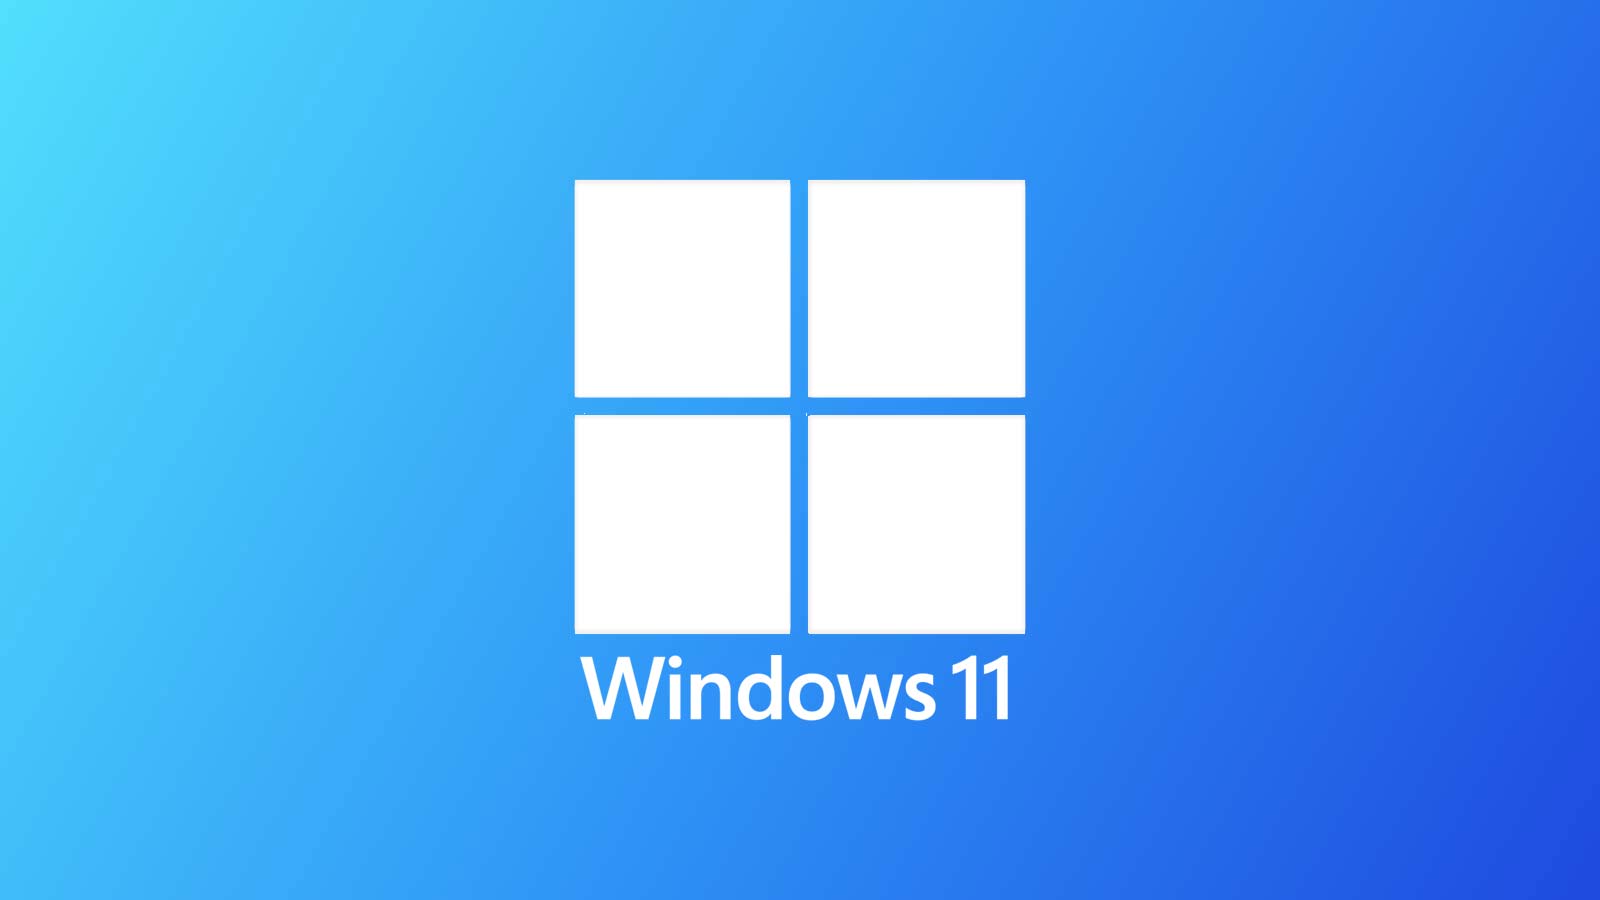 Microsoft is Working on a Faster Taskbar for Windows 11